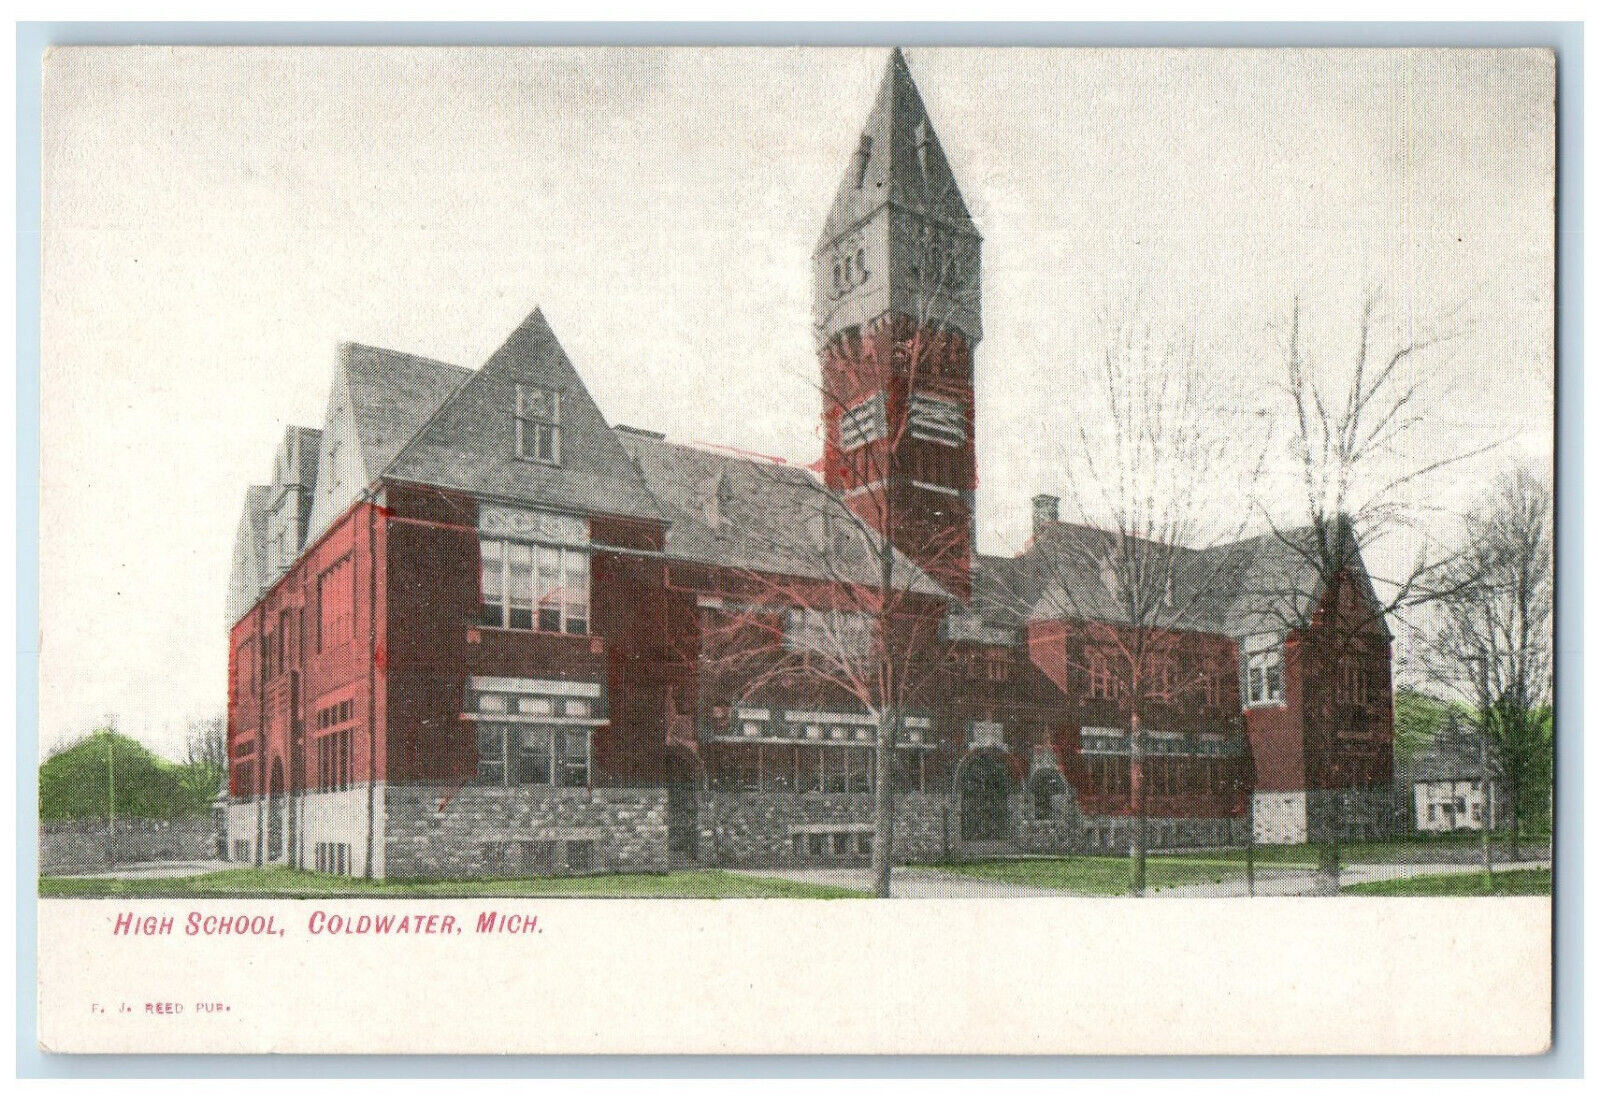 c1905 High School Building at Coldwater Michigan MI Unposted Antique Postcard